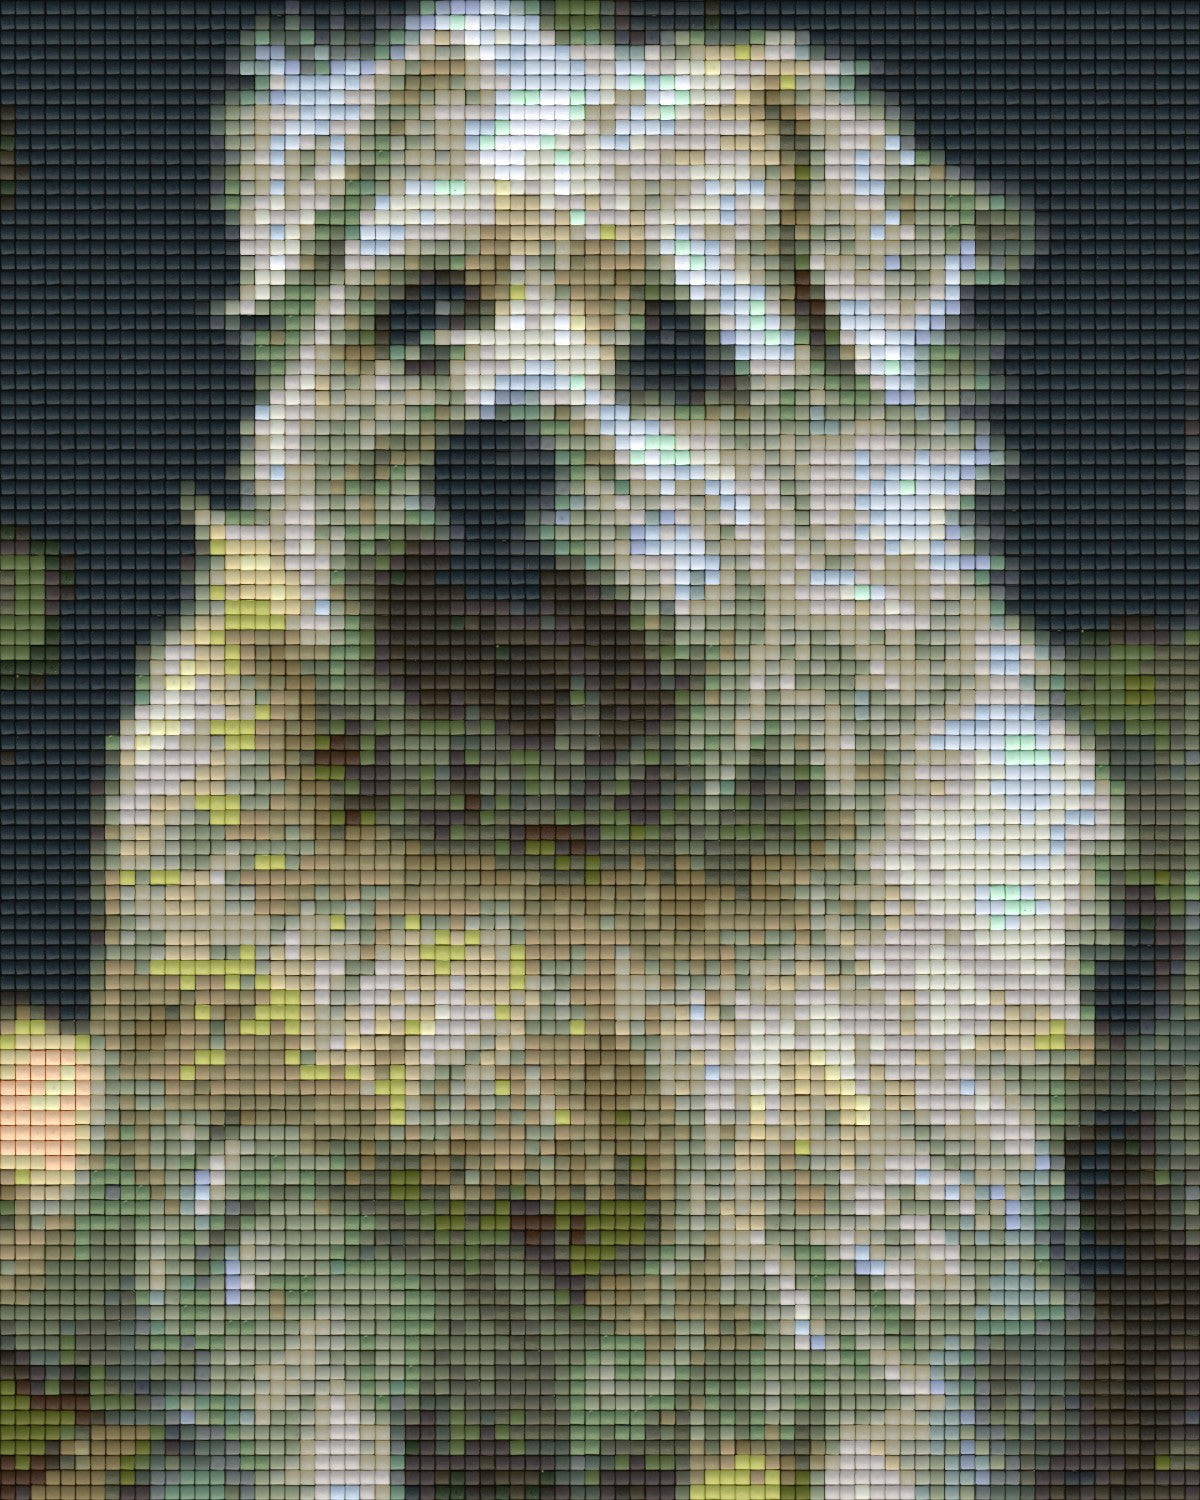 Pixel hobby classic set - Norfolk Terrier